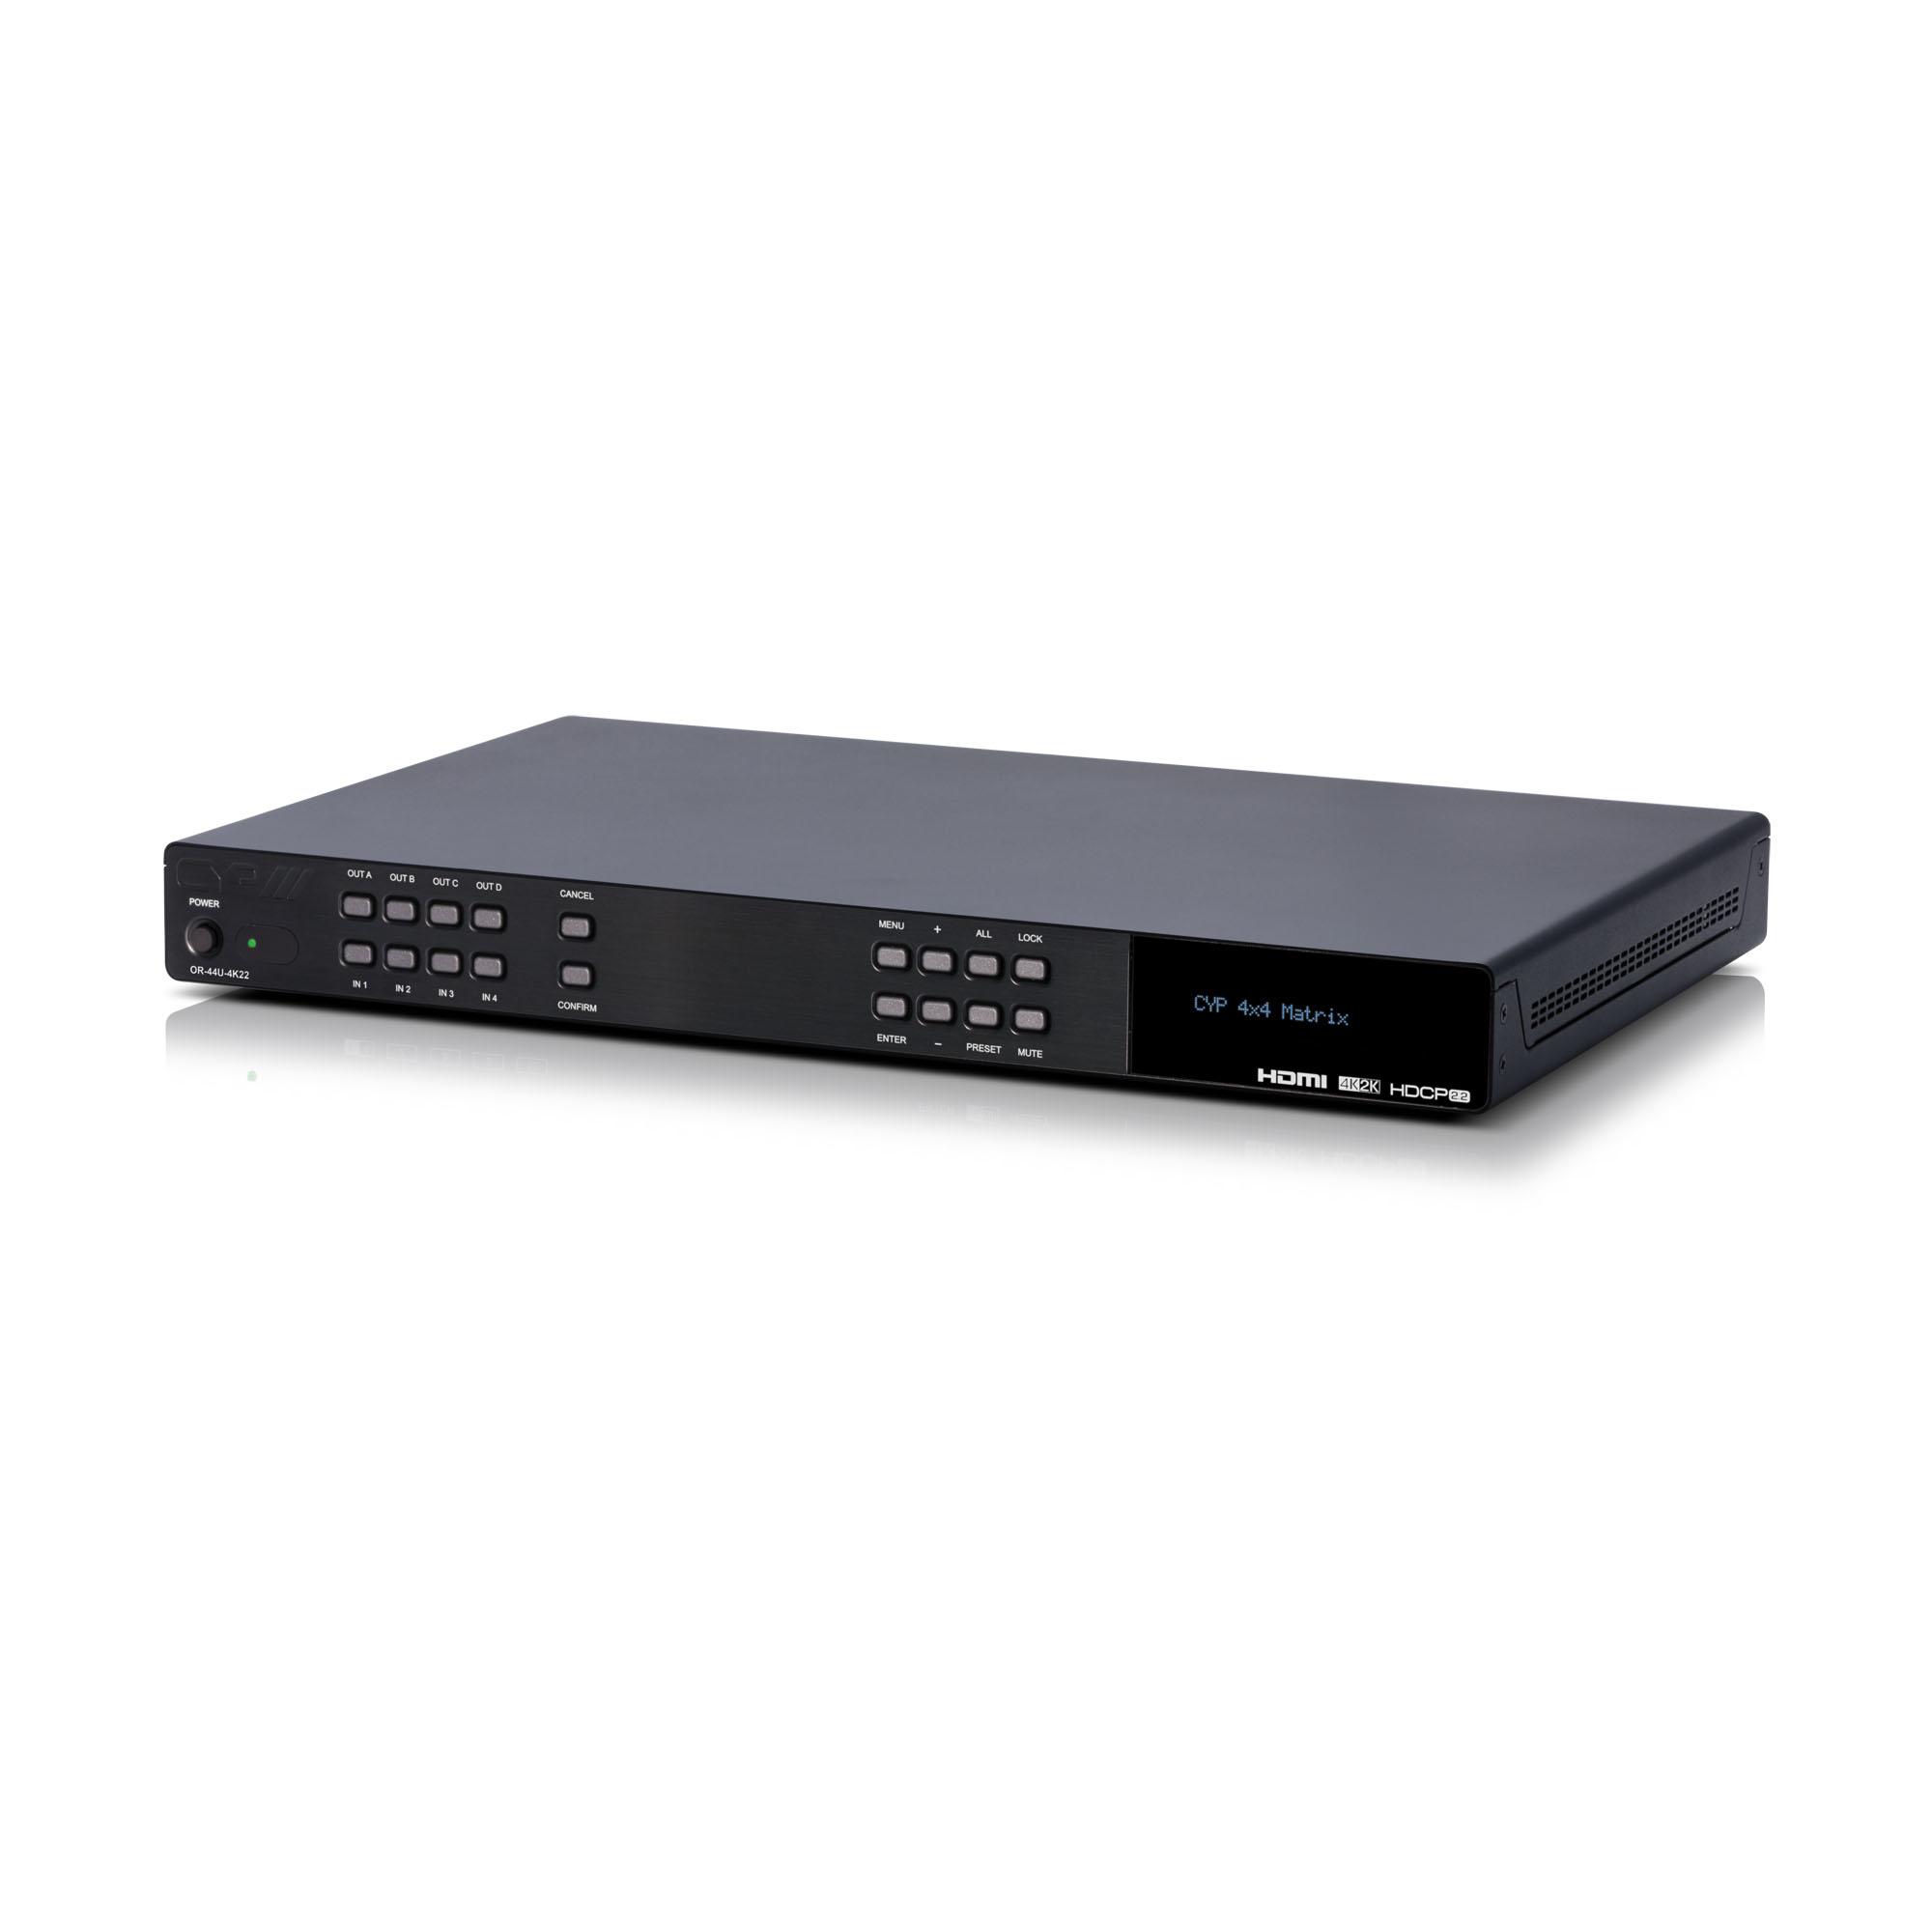 OR-44U-4K22 4 x 4 HDMI Matrix Switcher (6G, 4K, HDCP2.2, HDMI2.0, USB Power)